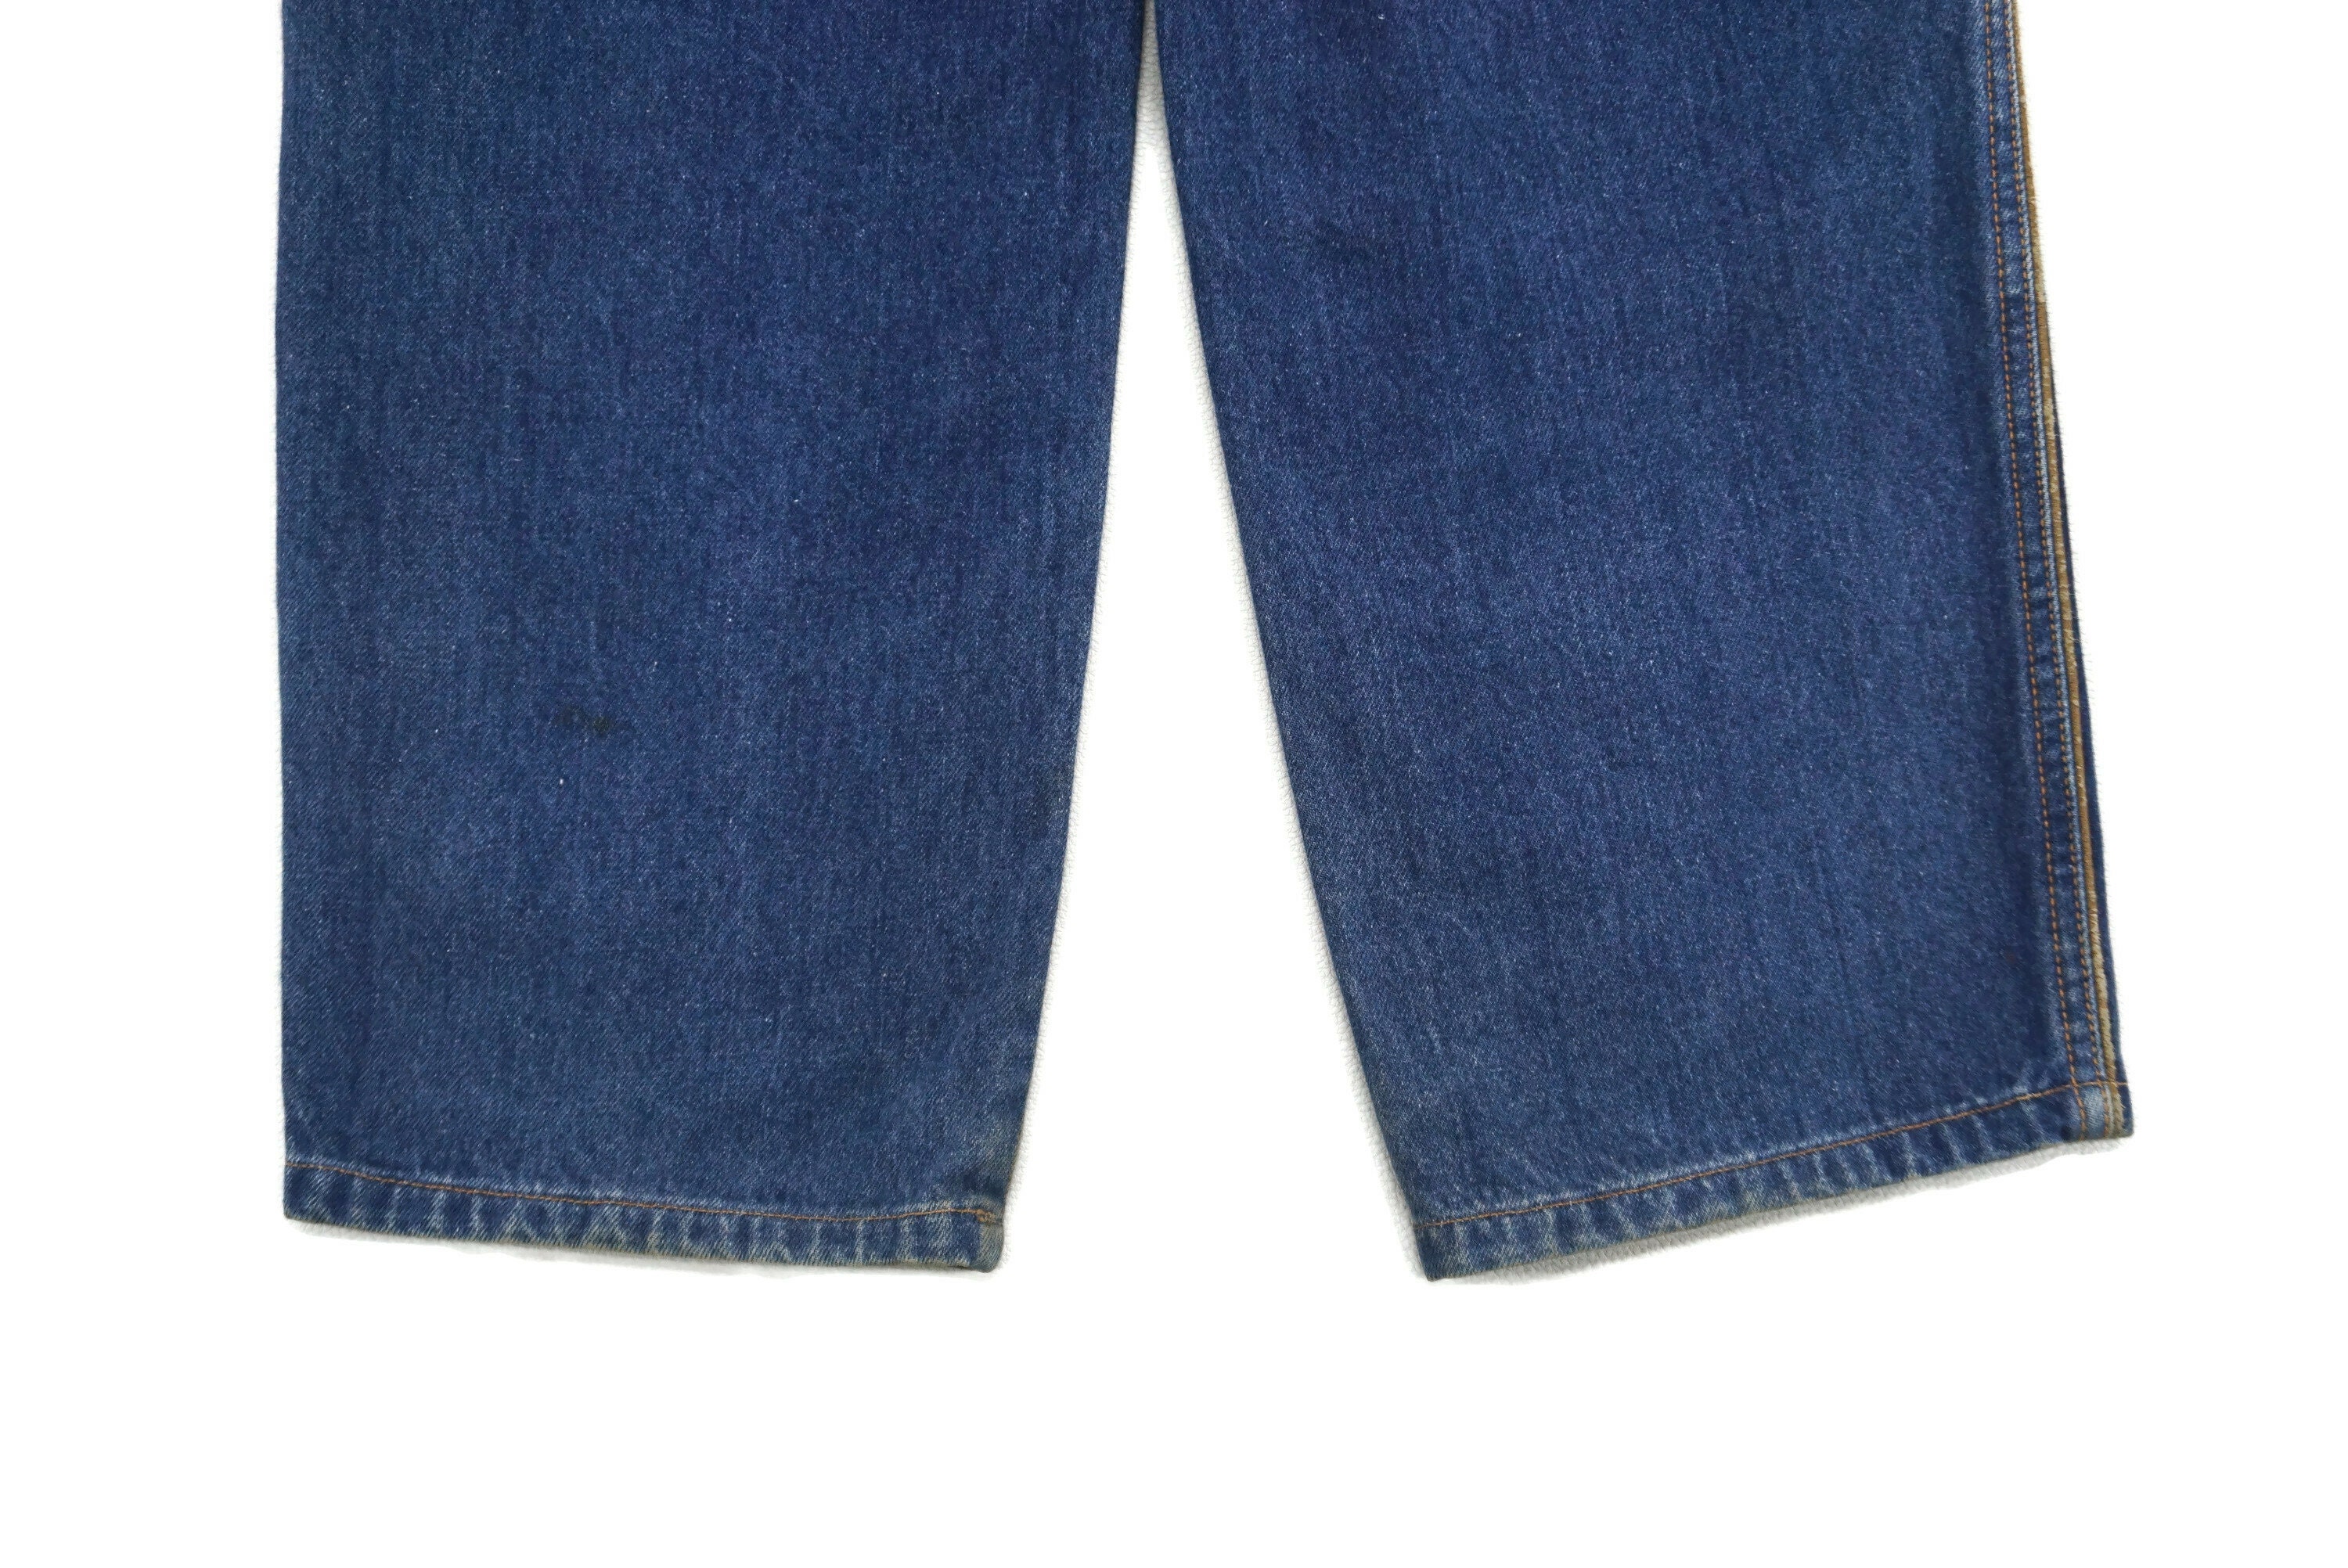 Santa Fe Jeans Size 31 W30xL26.5 Santa Fe Distressed Denim | Etsy